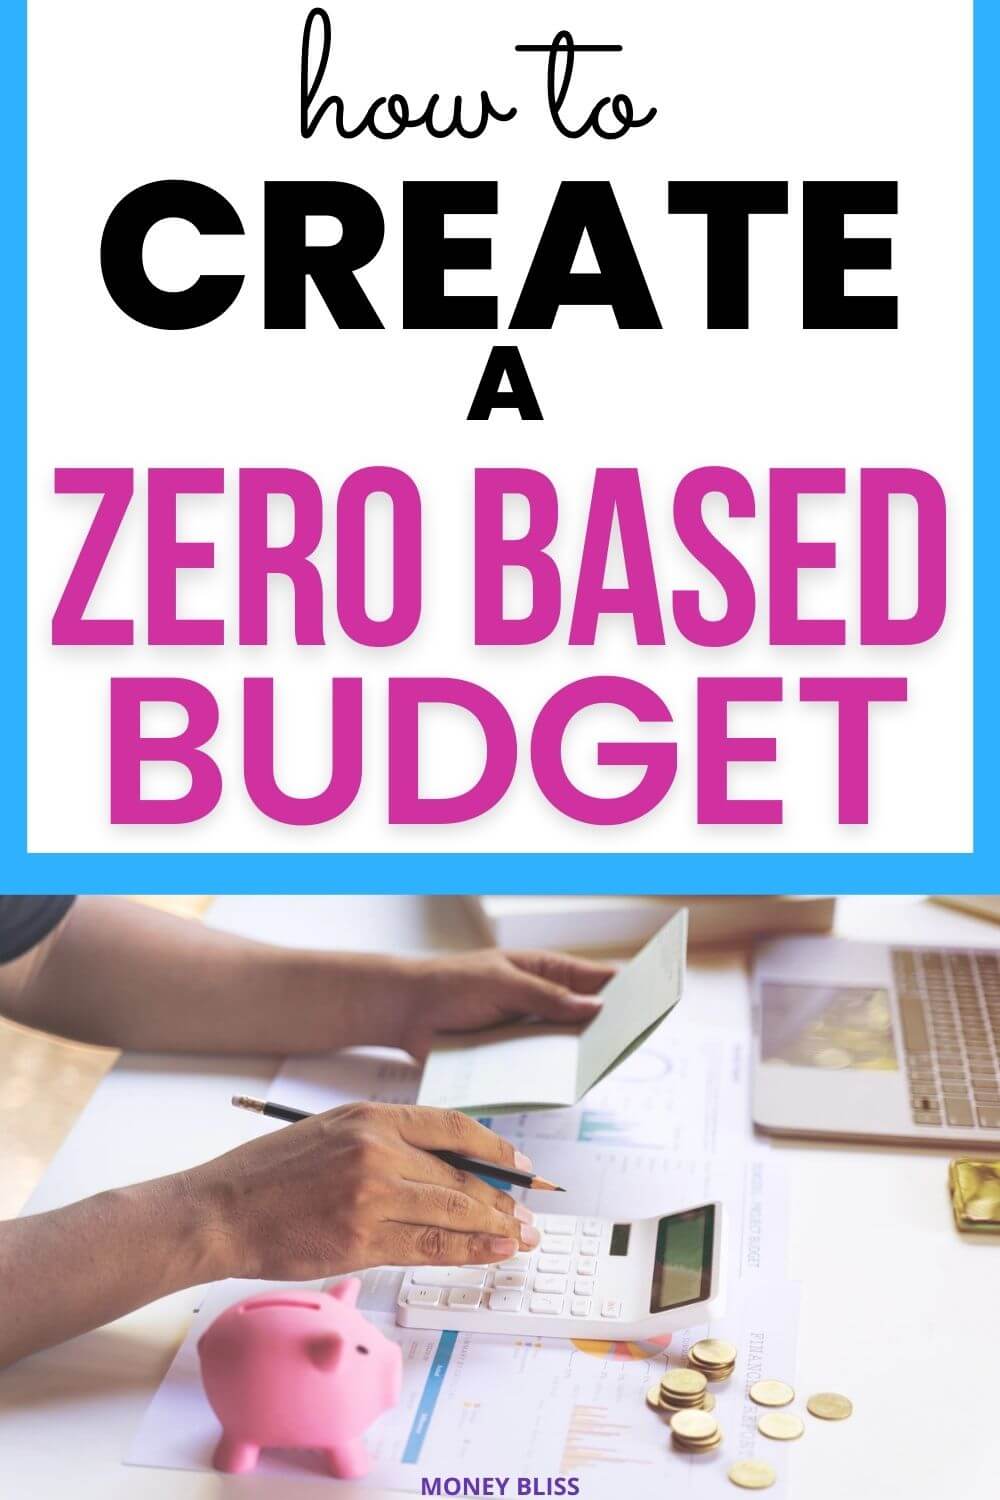 Zero Based Budget Template Google Sheets prntbl